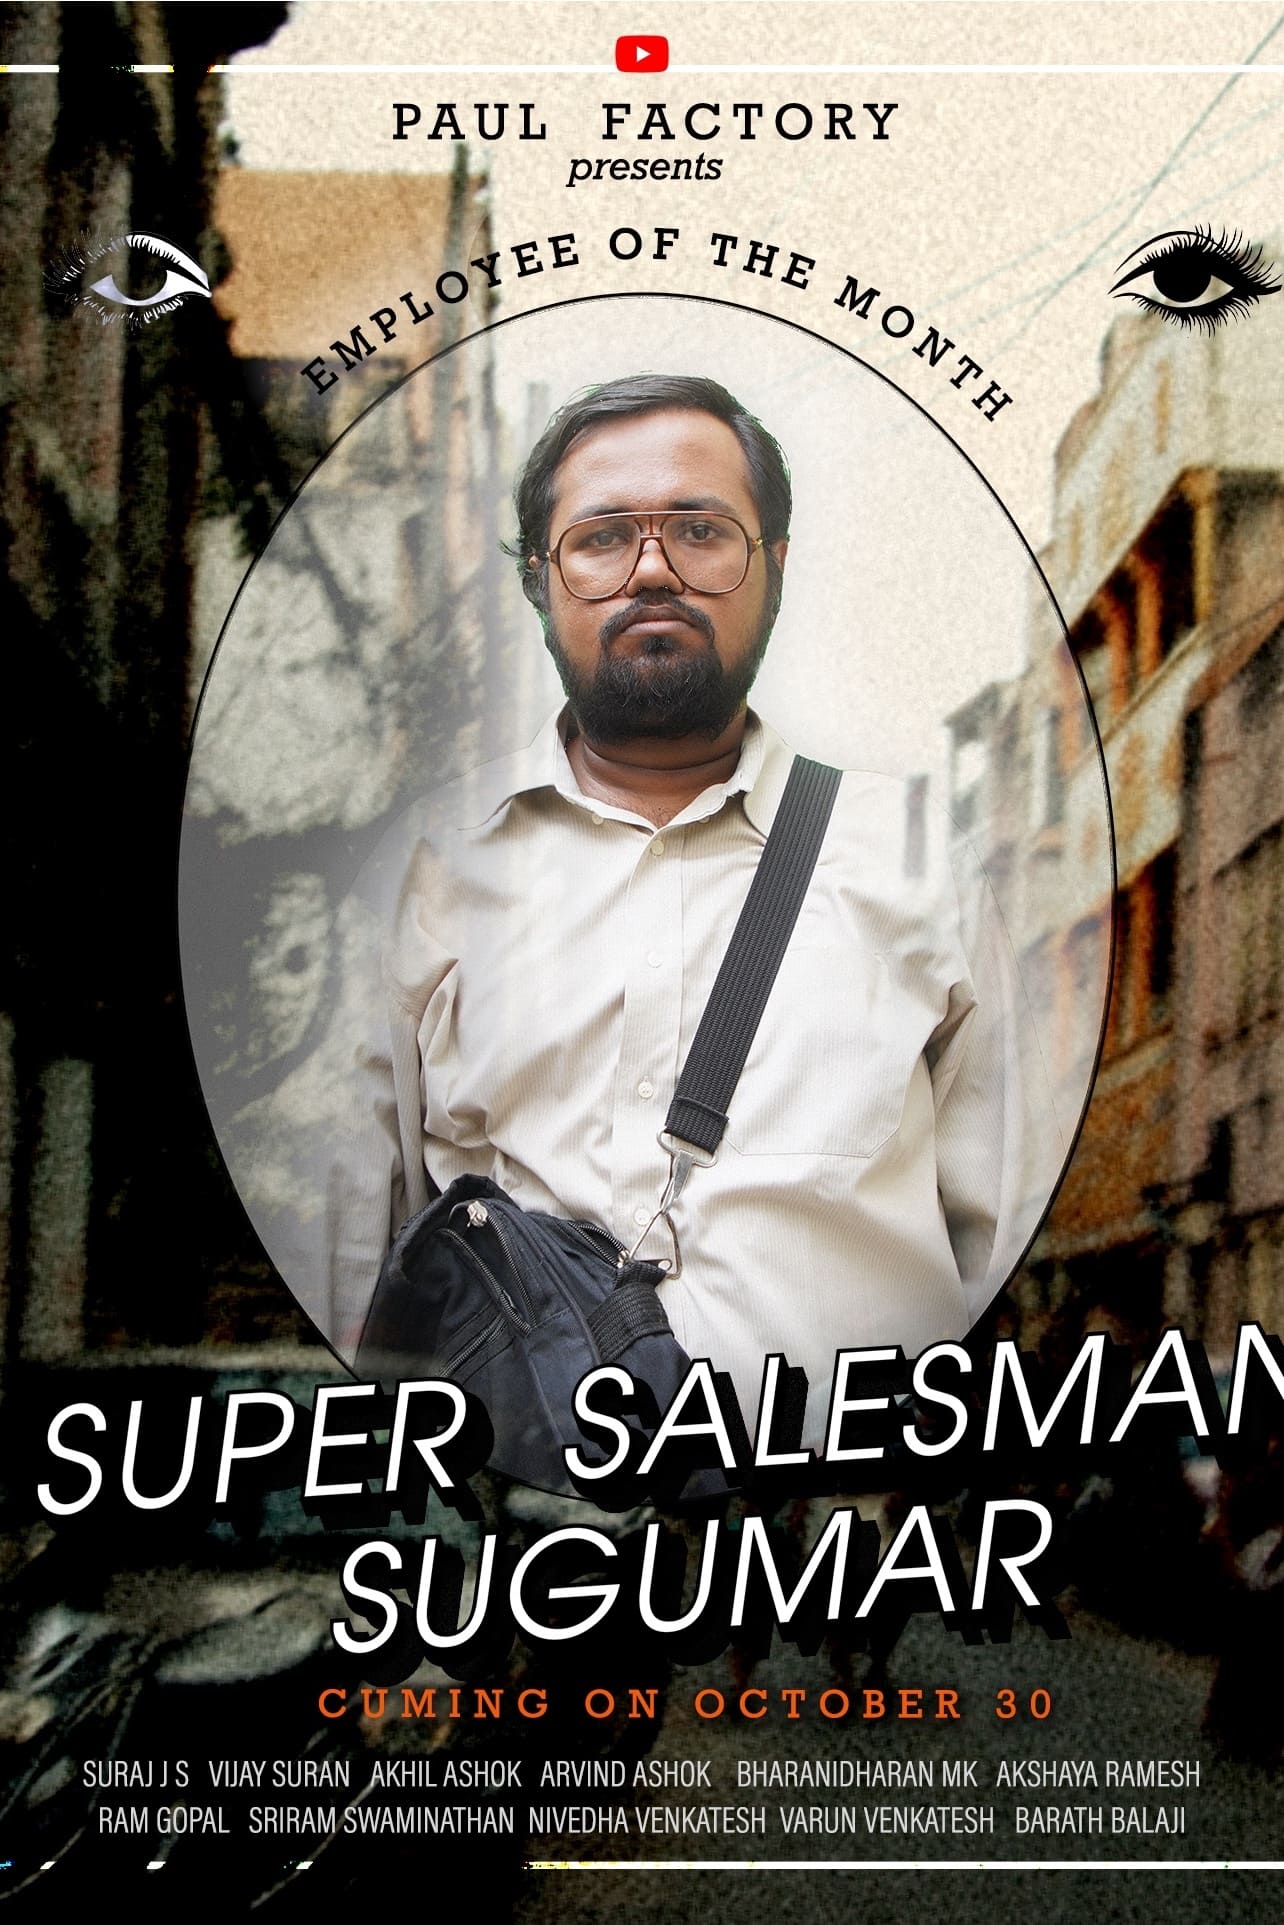 Super Salesman Sugumar